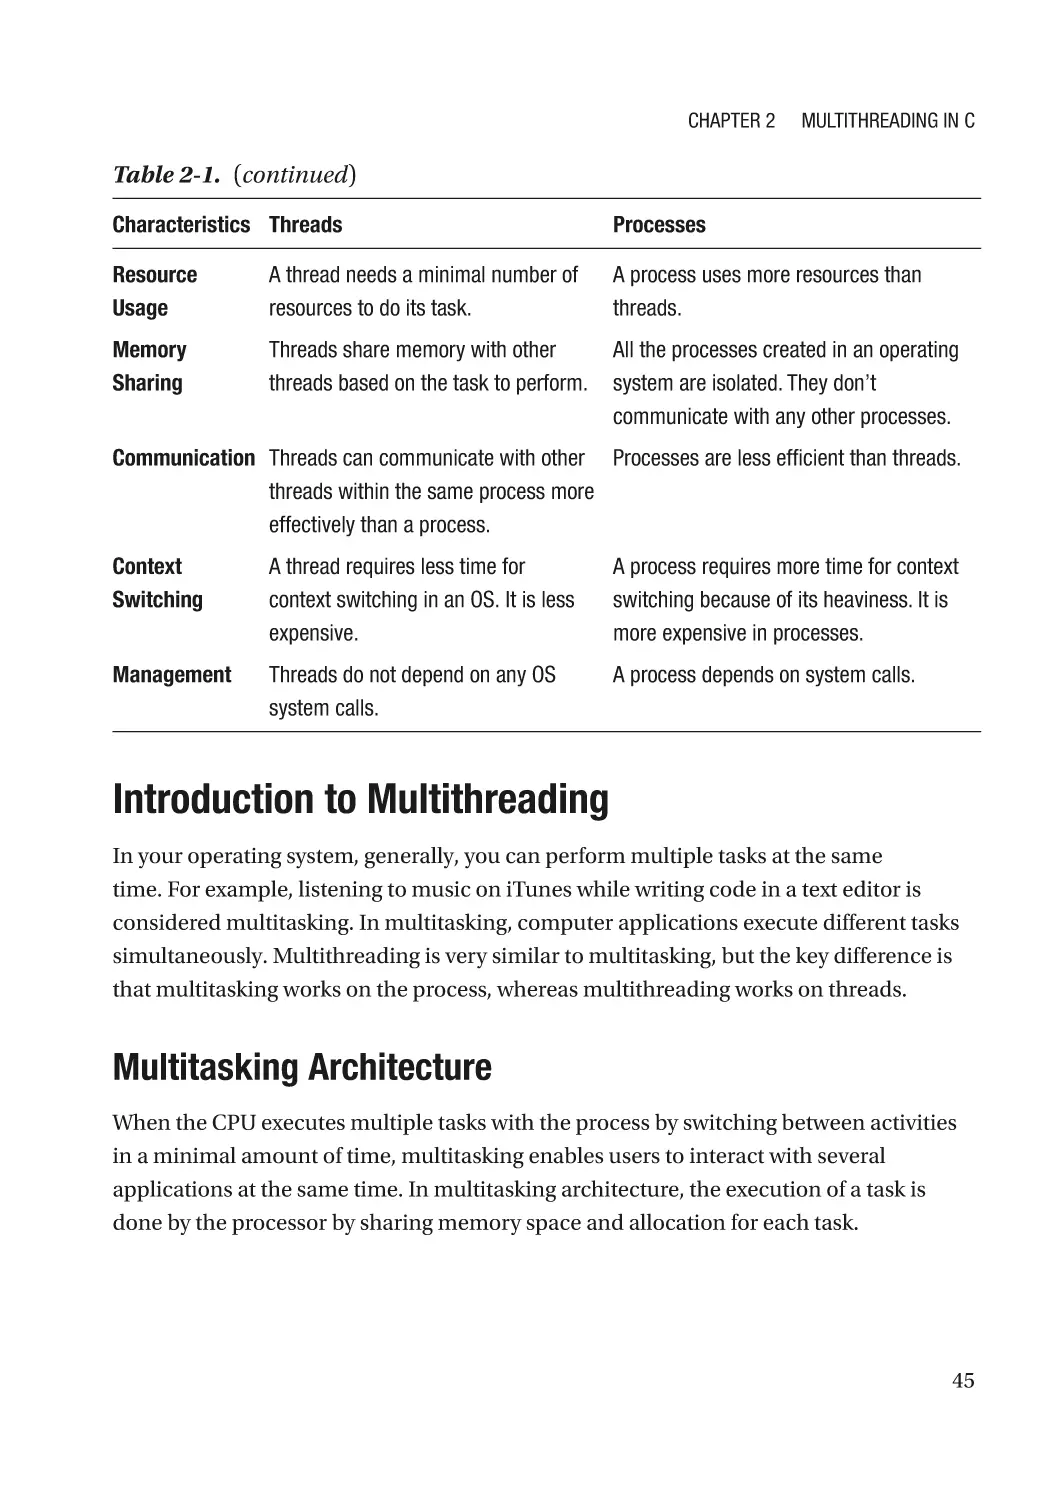 Introduction to Multithreading
Multitasking Architecture